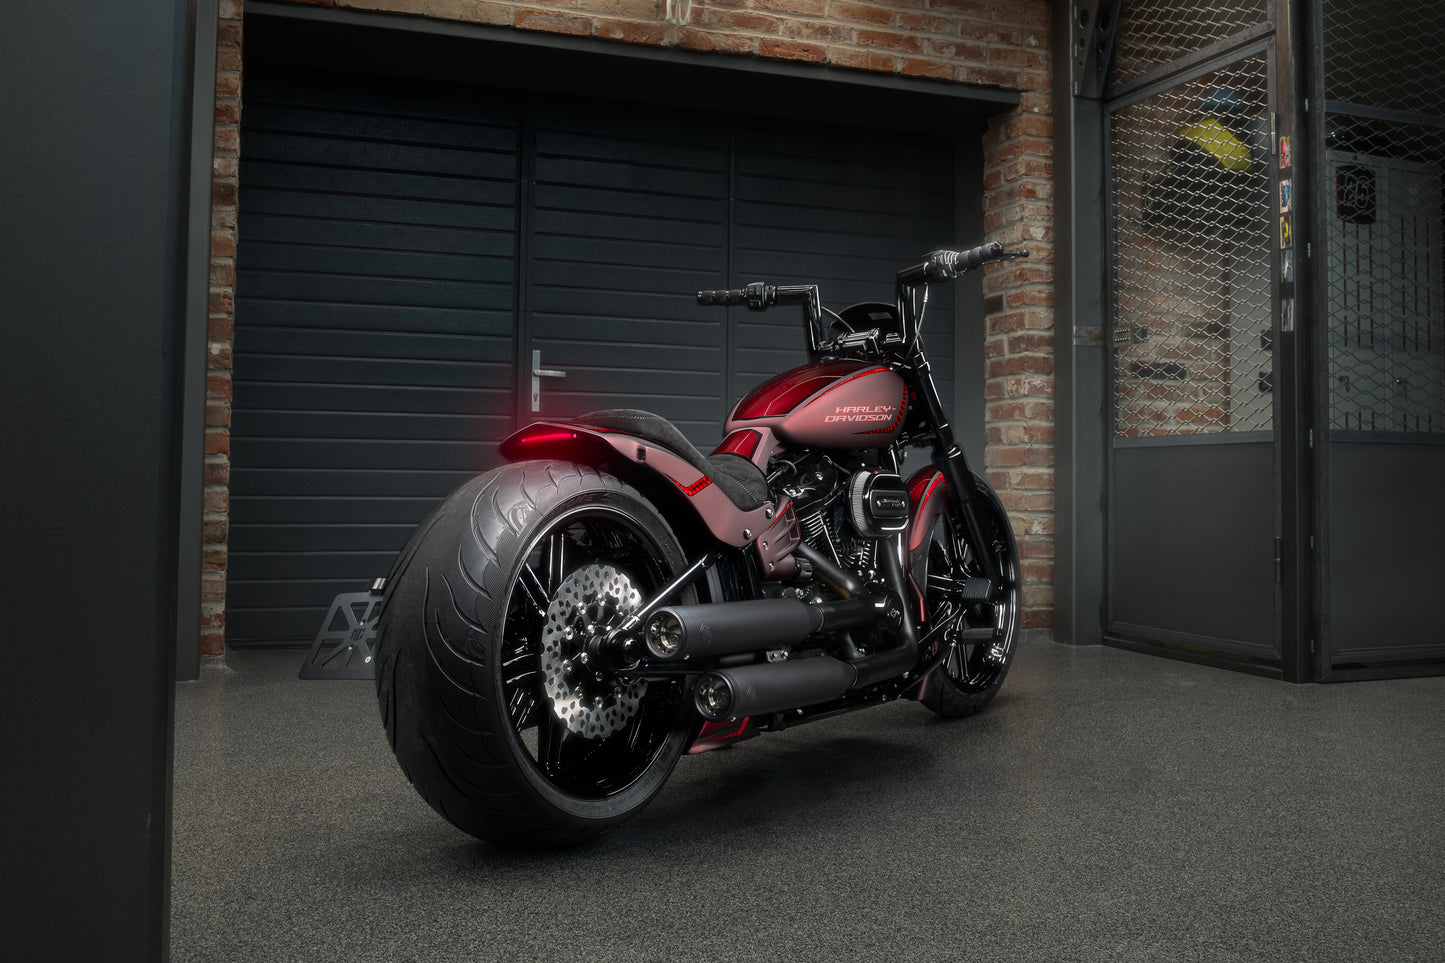 Harley Davidson motorcycle with Killer Custom "Killer Bull' fat handlebars from the rear in an industrial environment